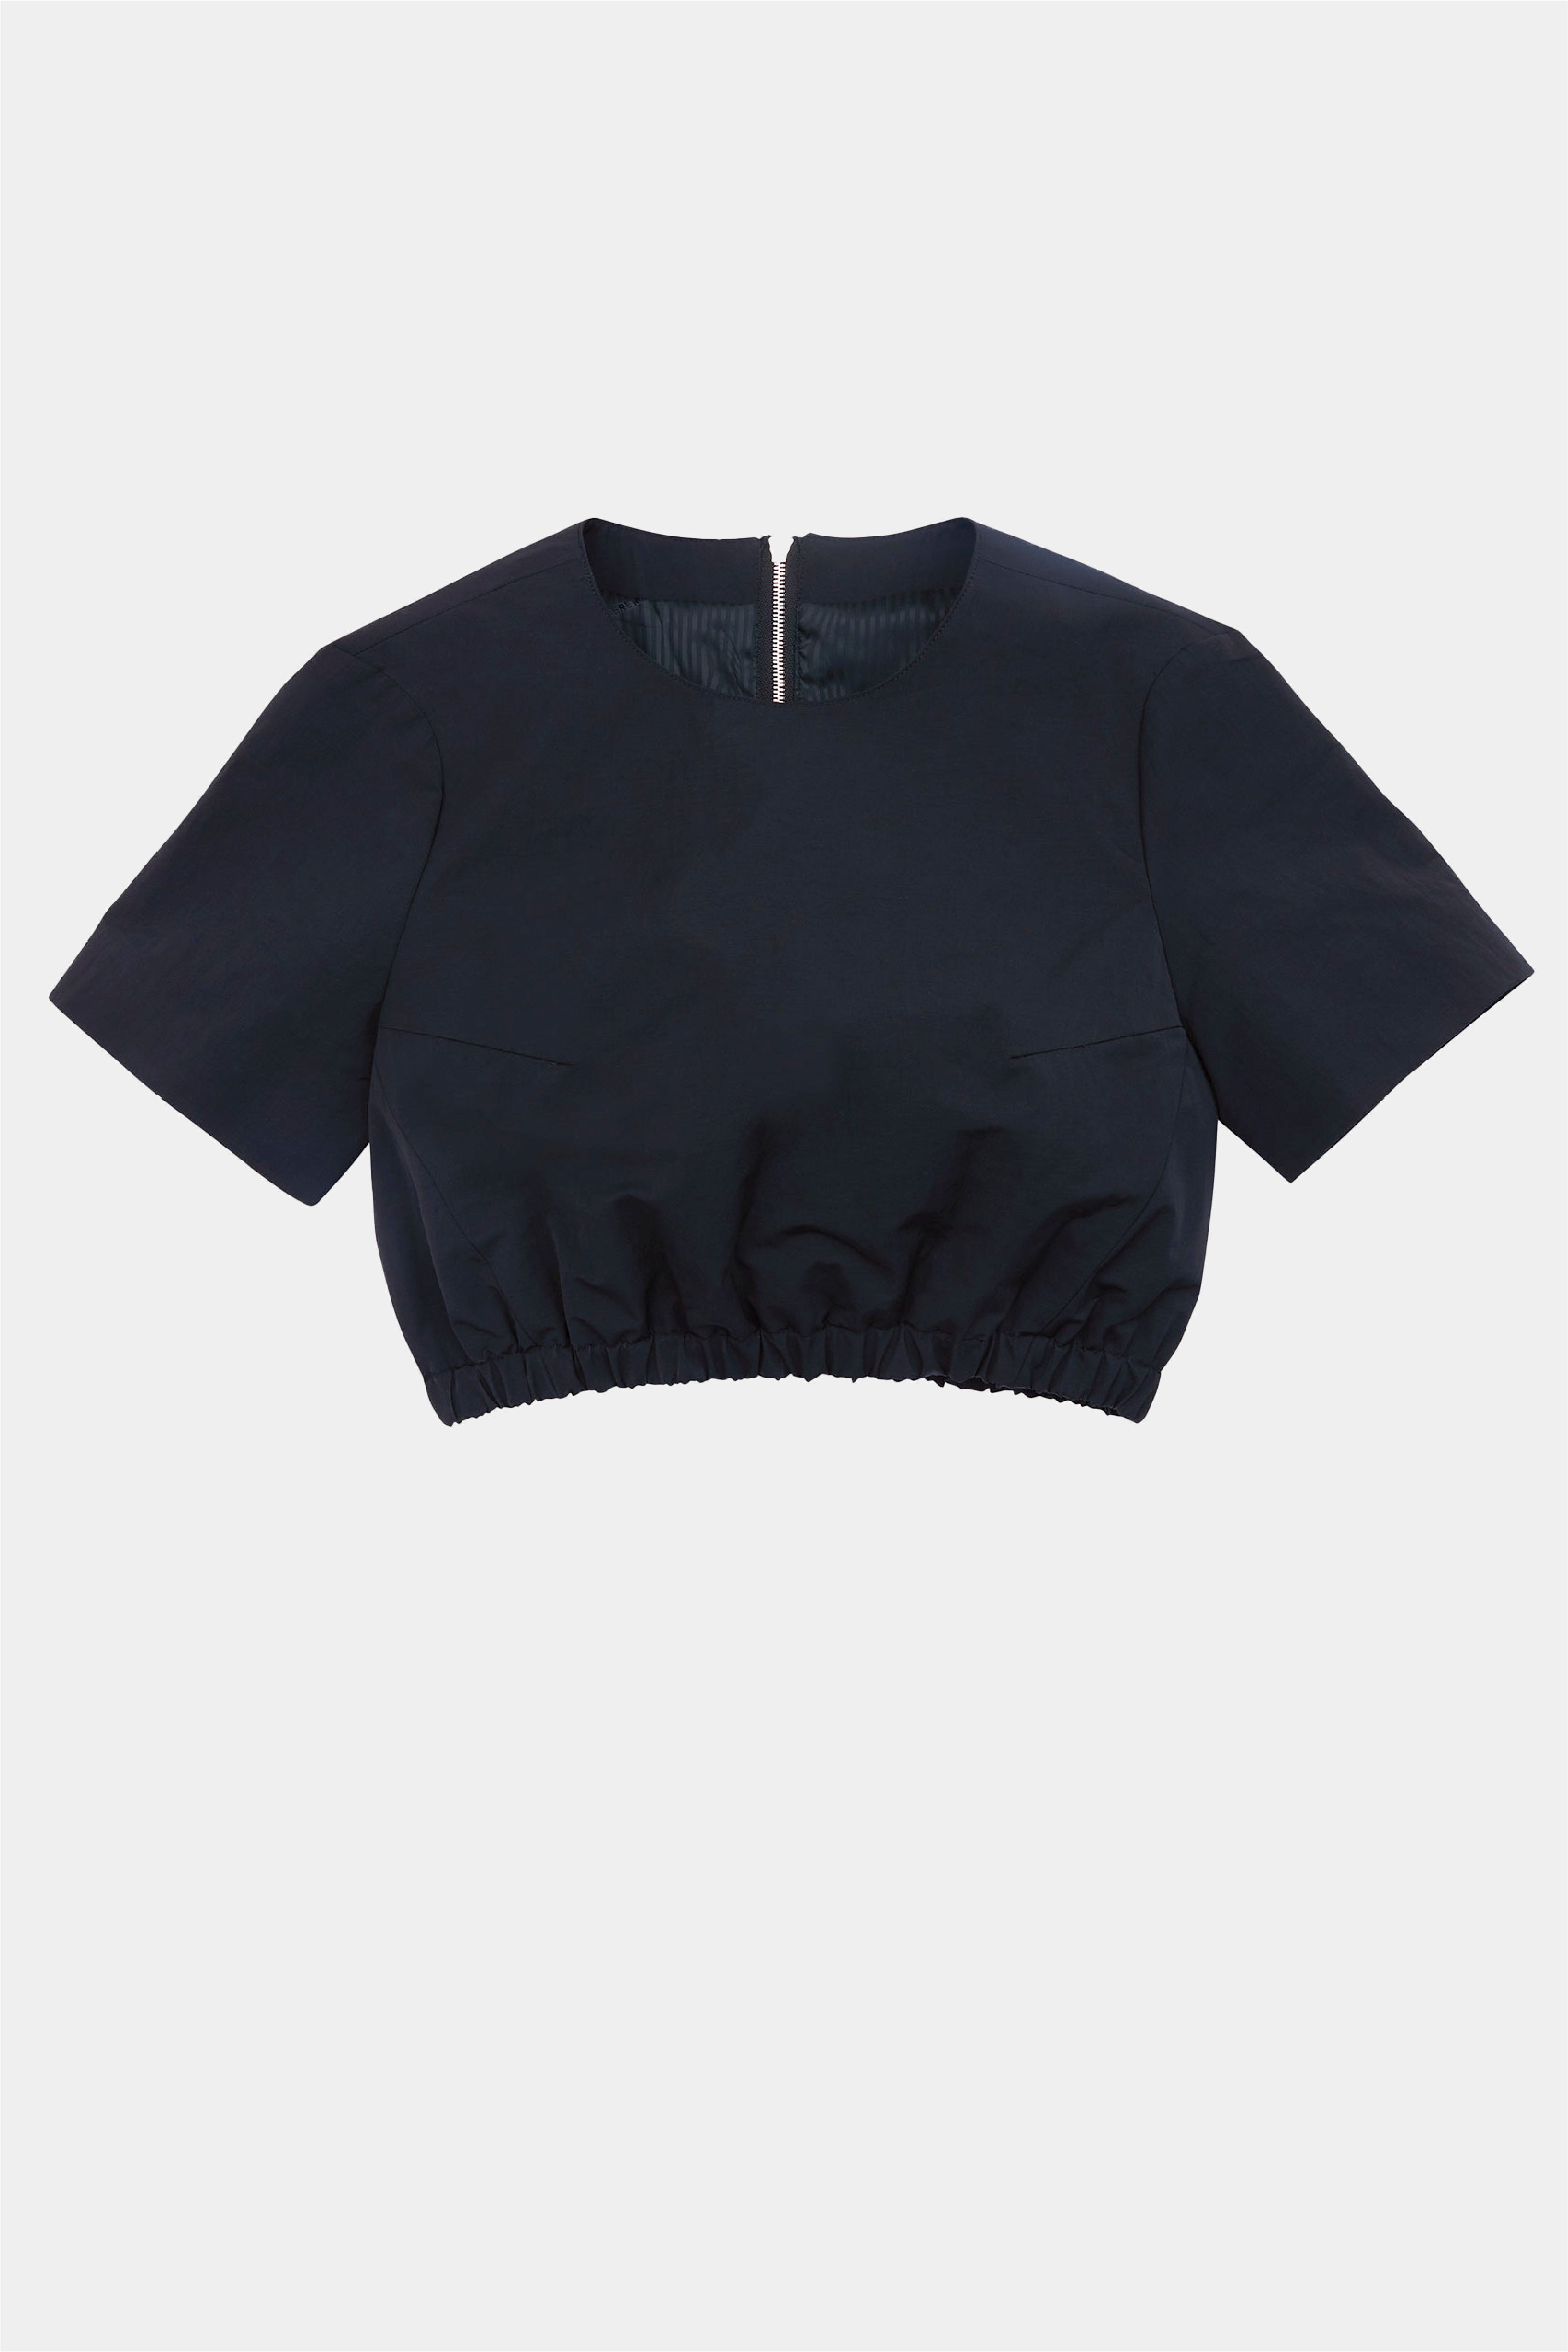 Selectshop FRAME - ADER ERROR Flut Cropped T-Shirt T-Shirts Concept Store Dubai